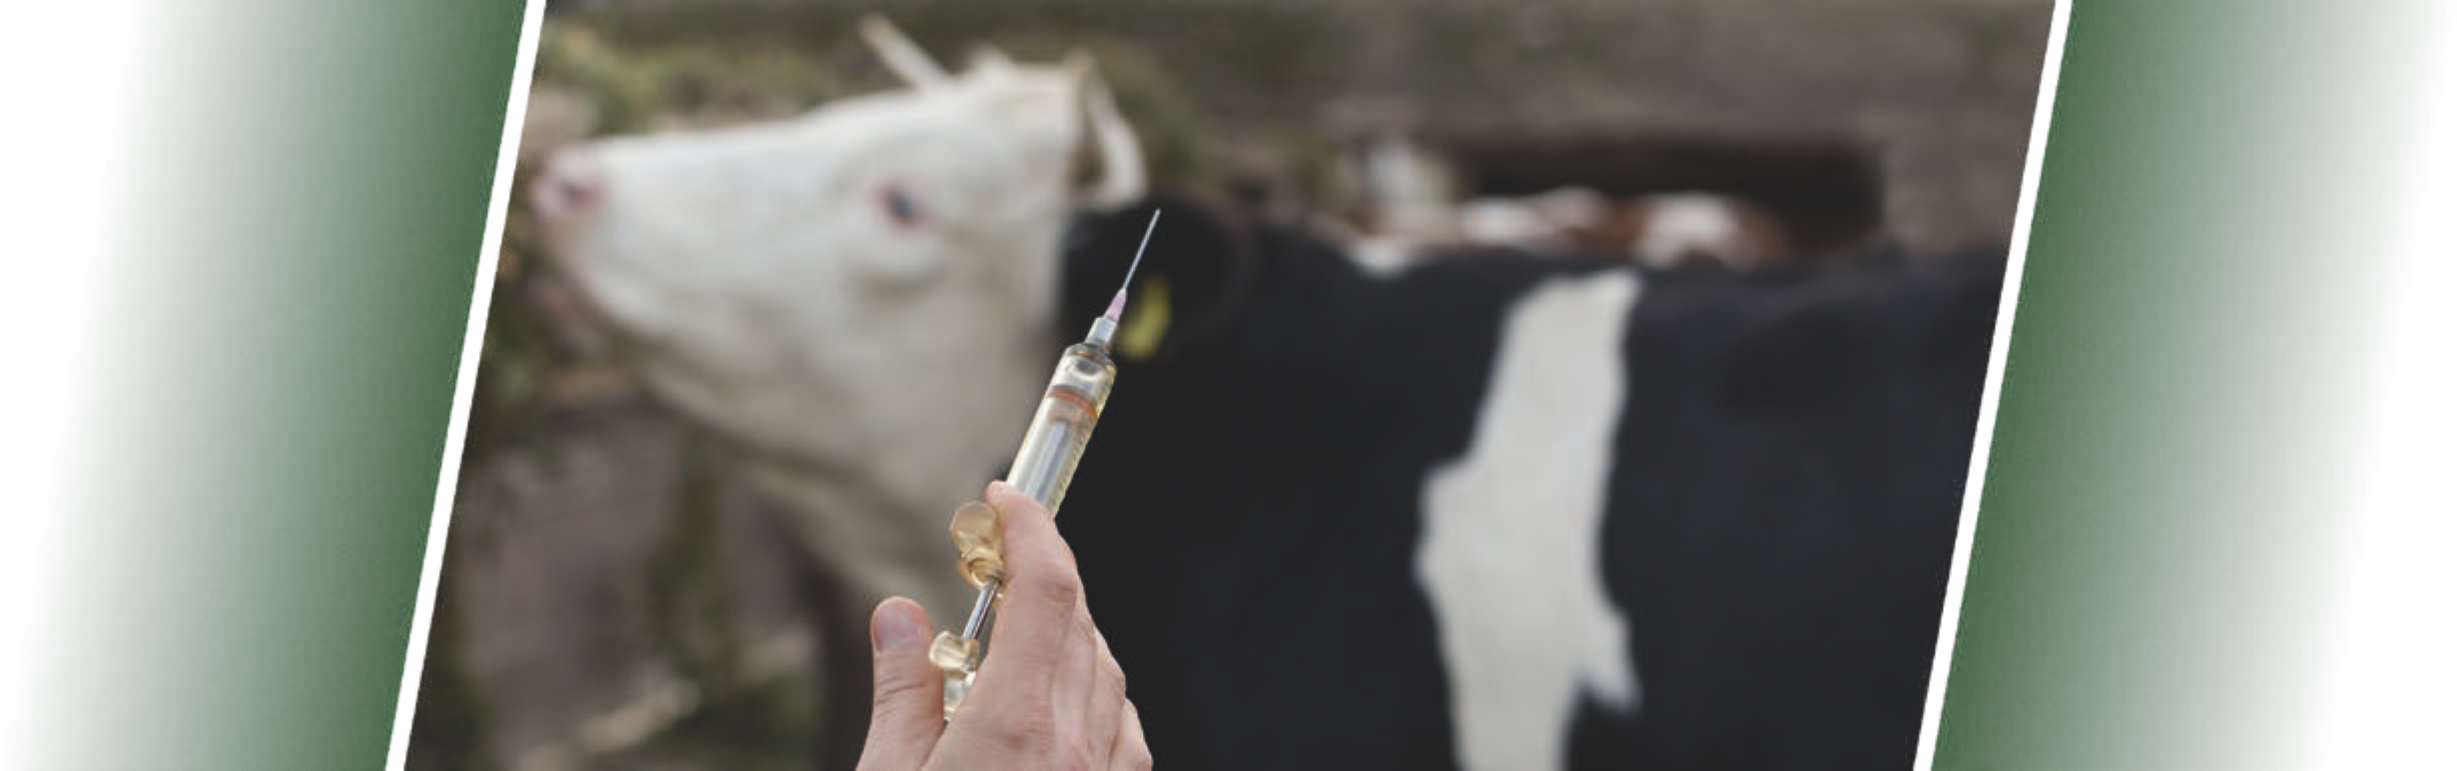 bovistem_bro Тест на определение антибиотиков в молоке